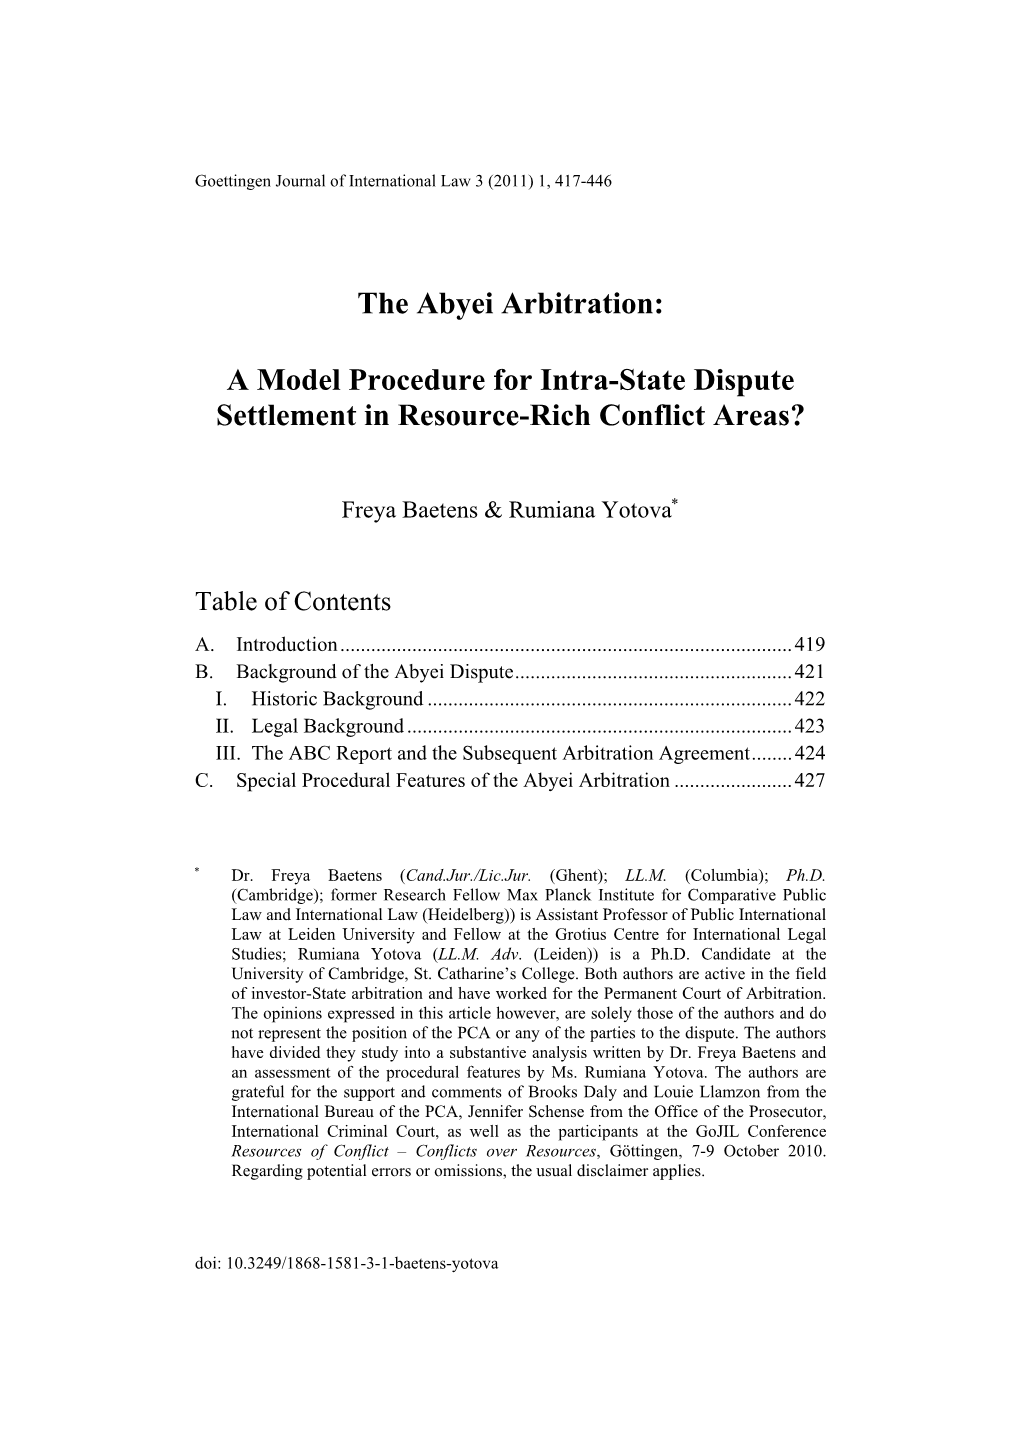 The Abyei Arbitration